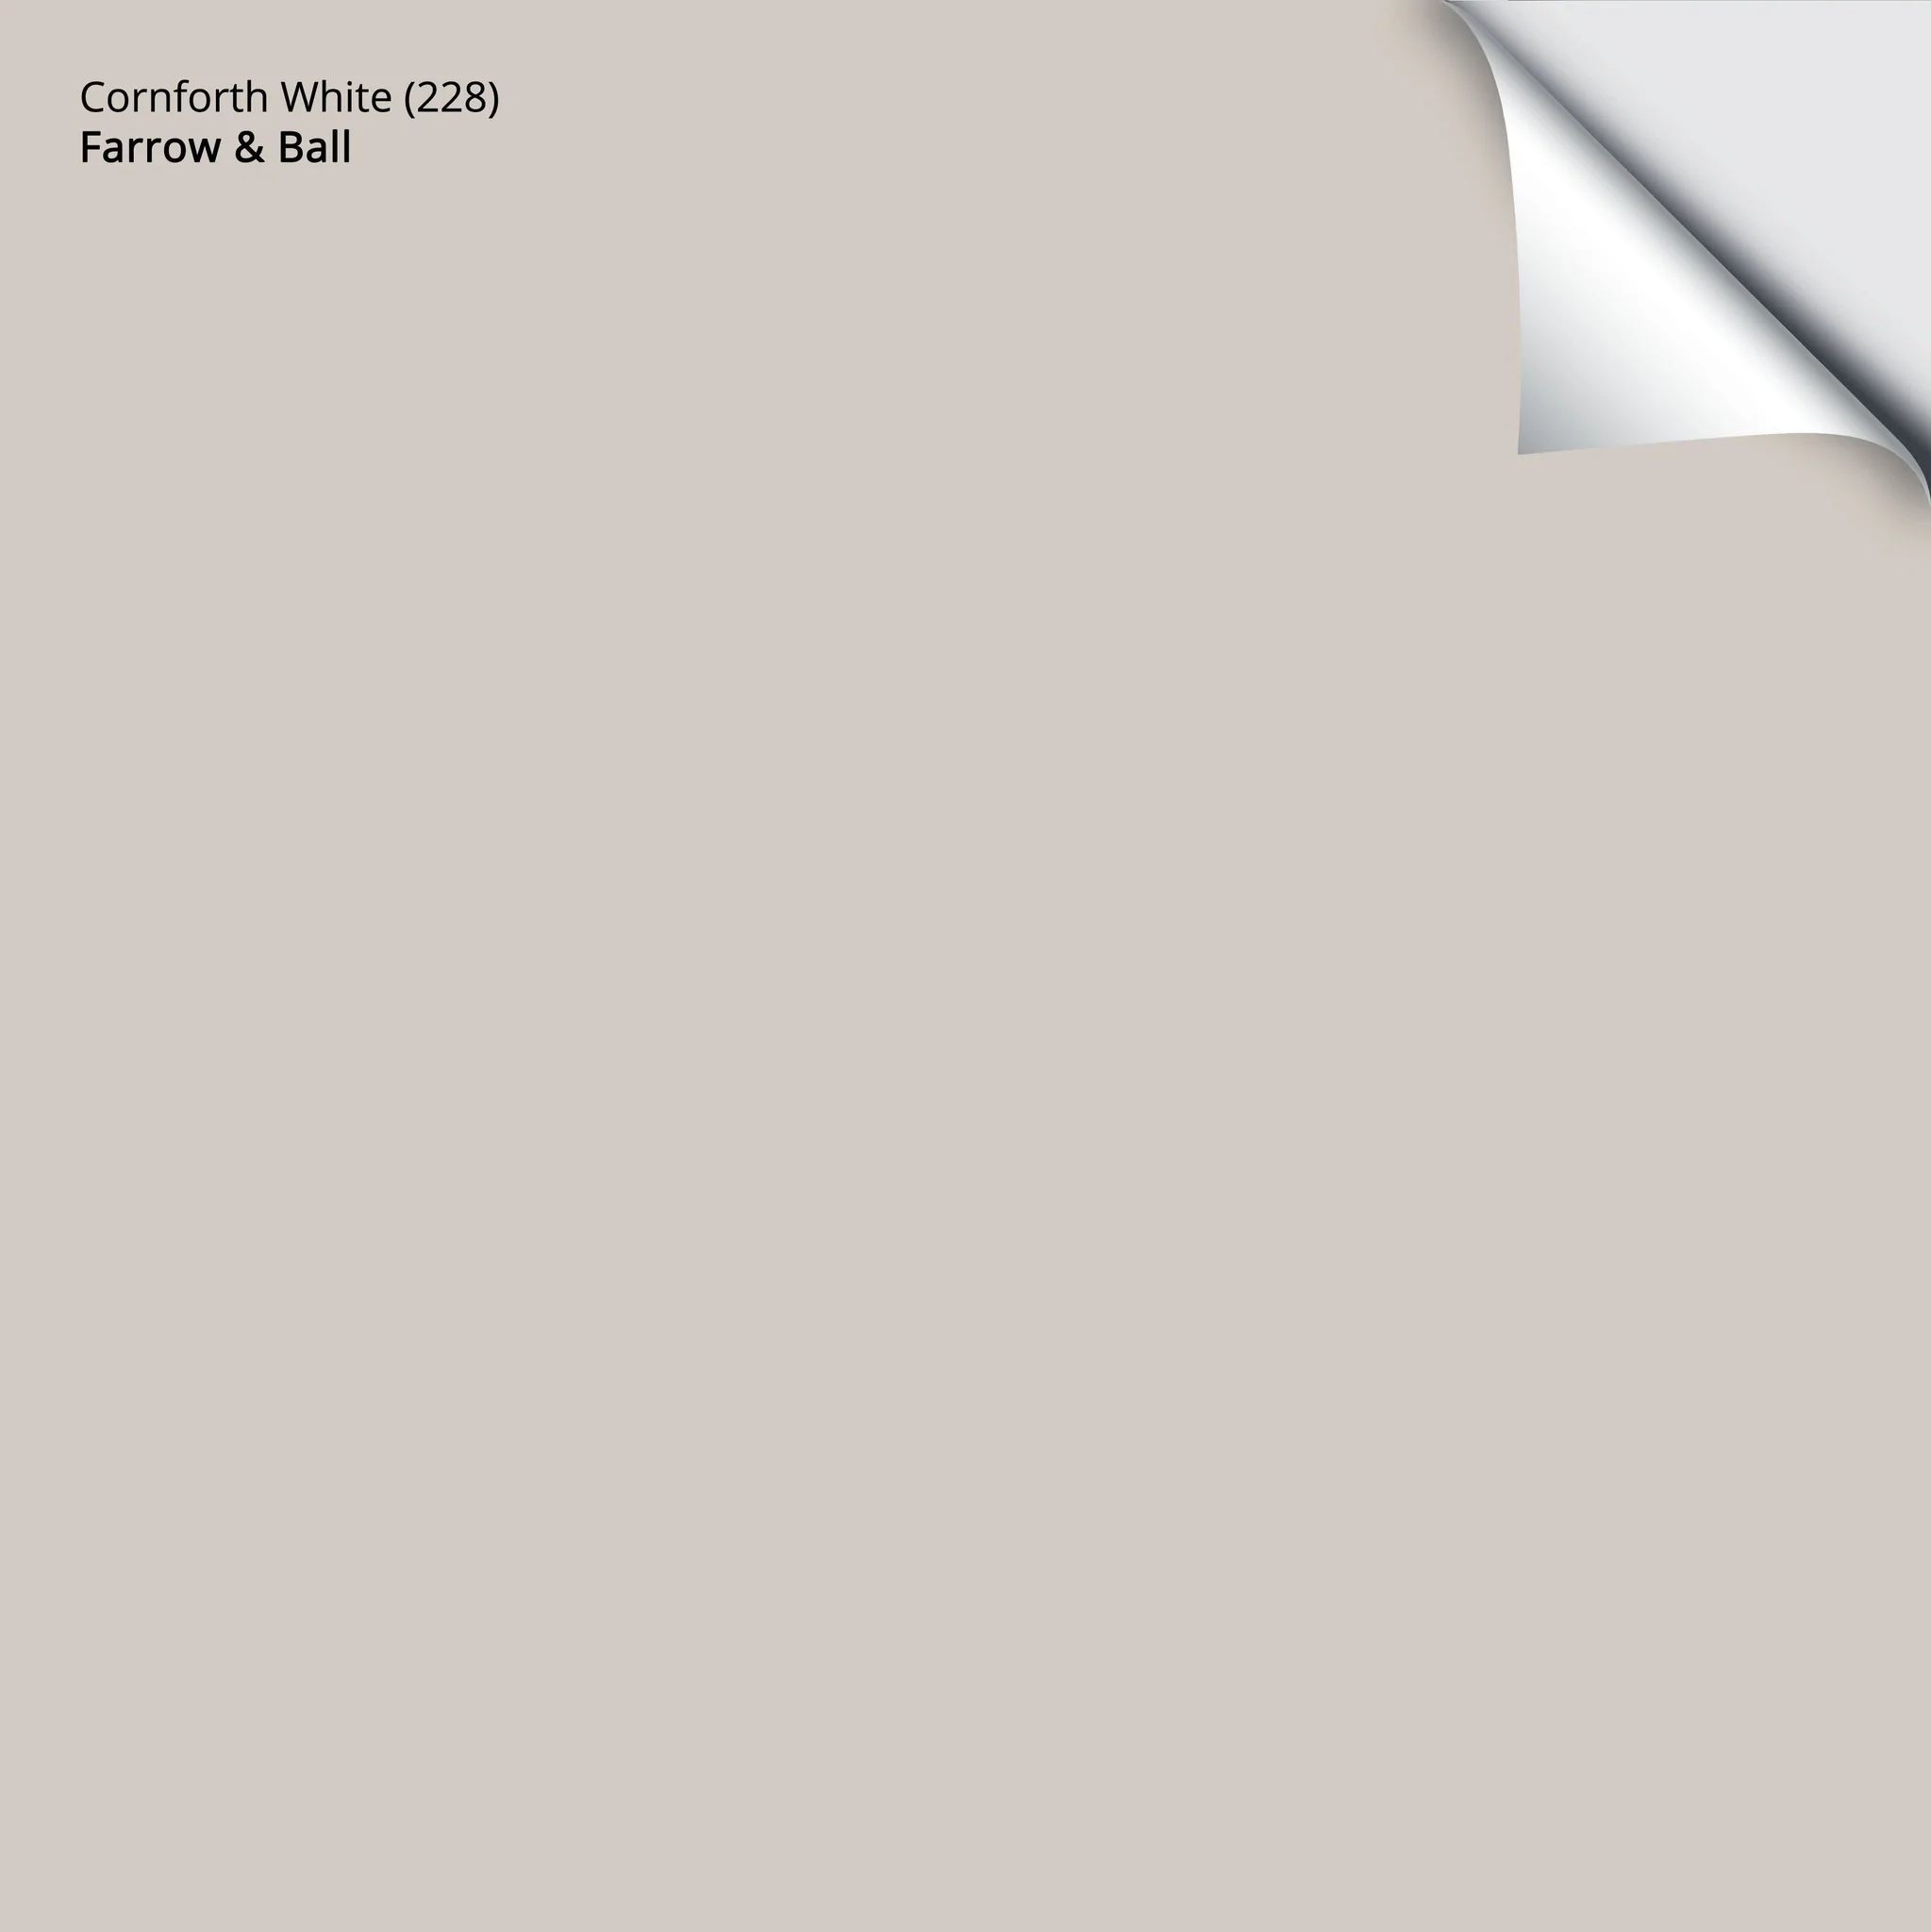 Cornforth White (228) | Farrow & Ball | Samplize Peel and Stick Paint Sample